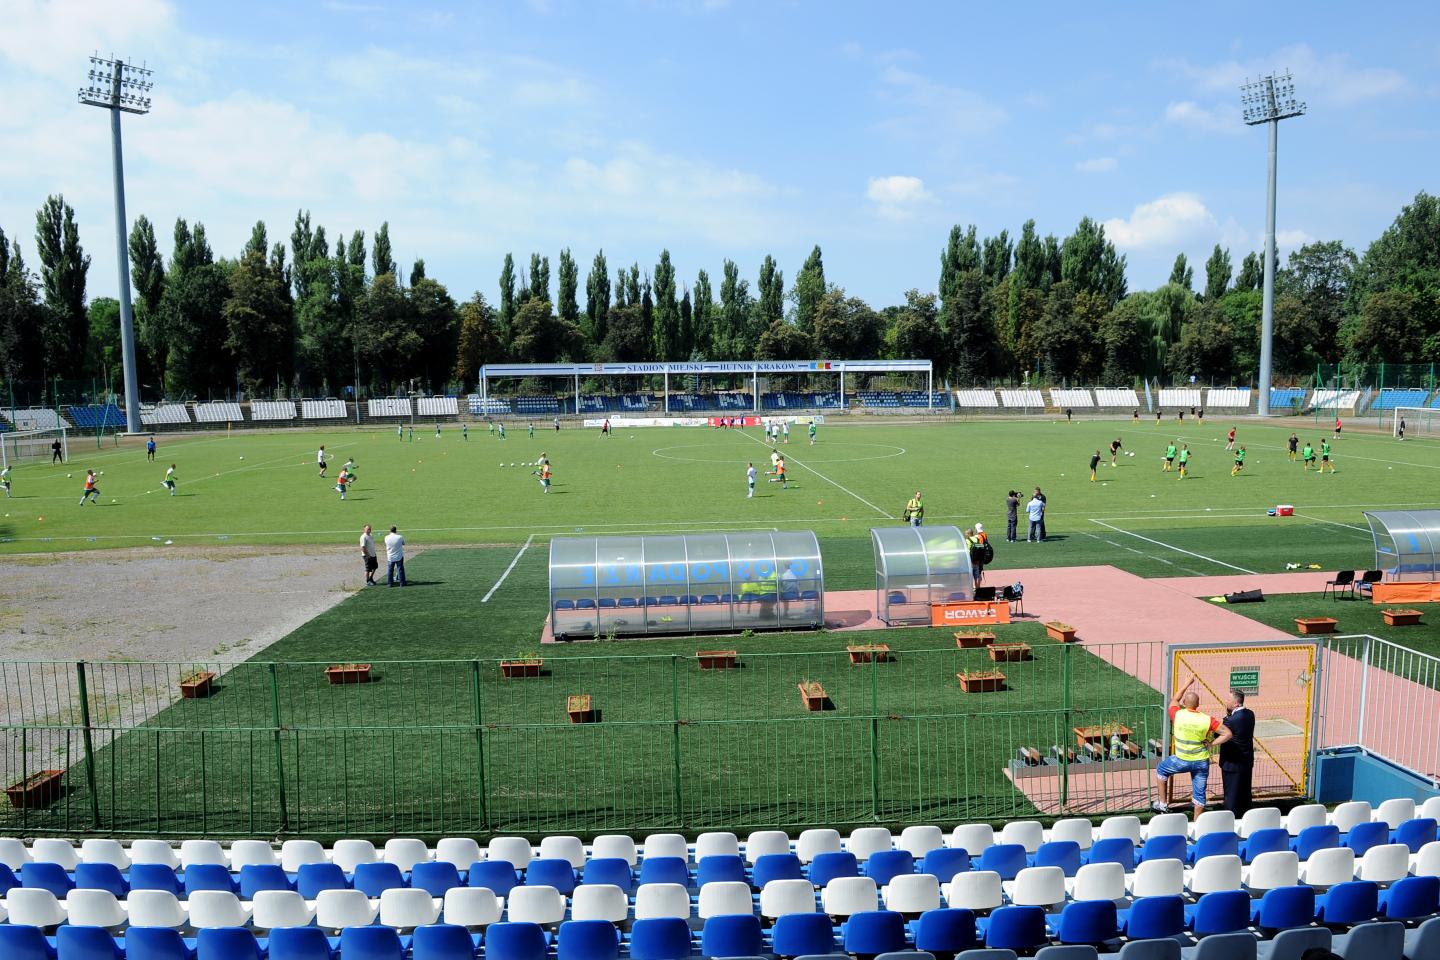 Stadion Hutnik Kraków (2012-2018)